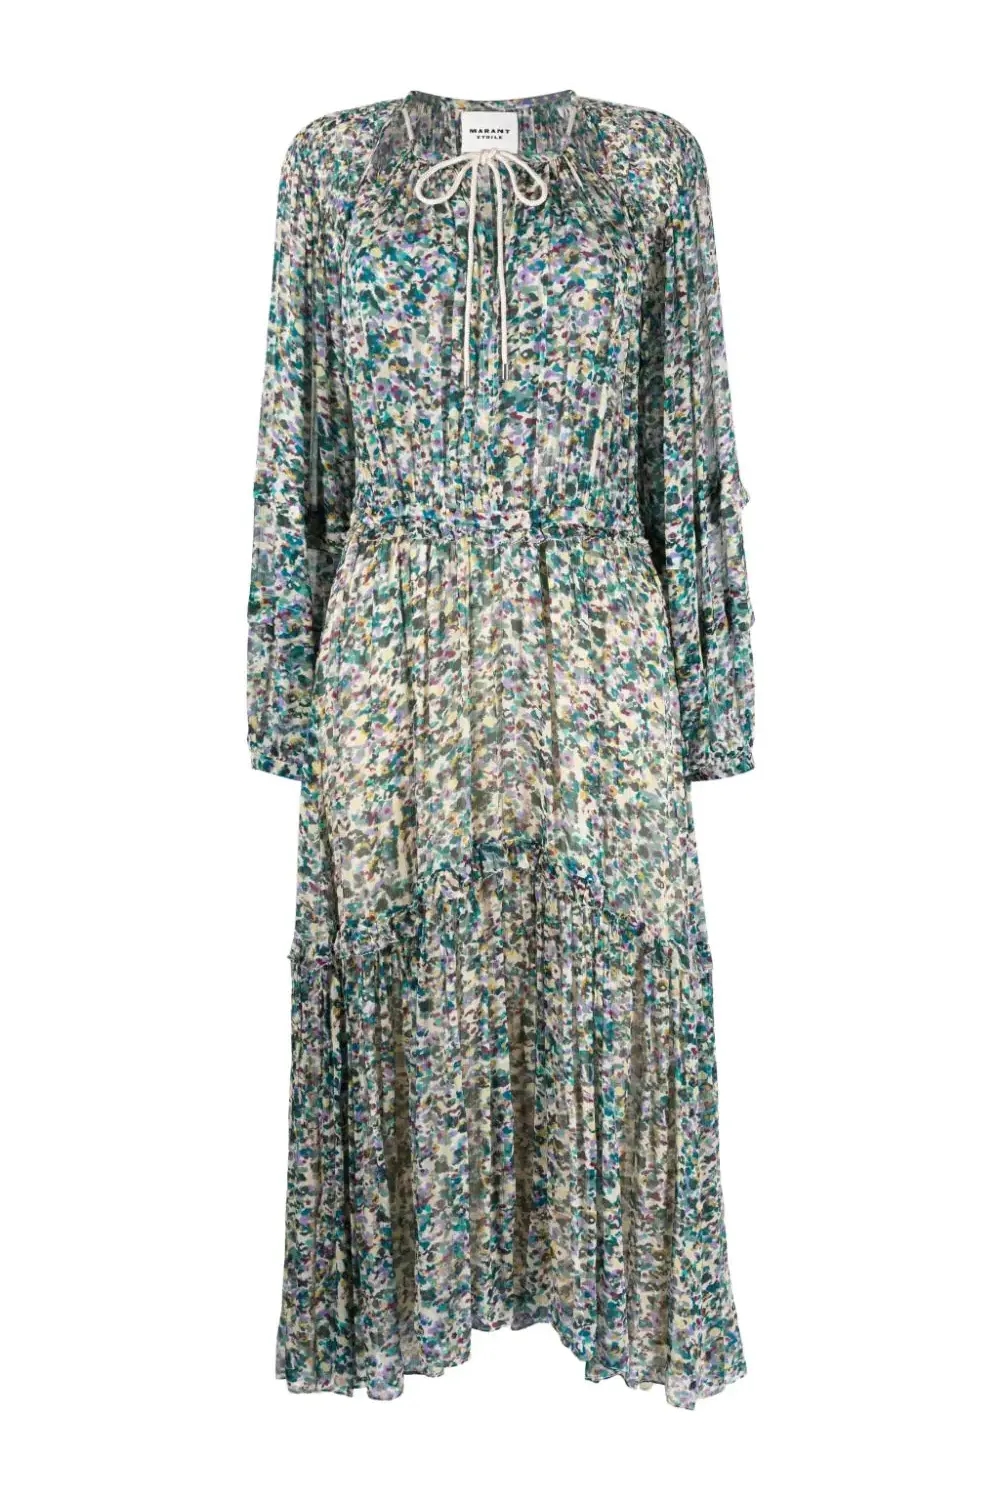 Fratela long-sleeved chiffon print dress, 3 colors